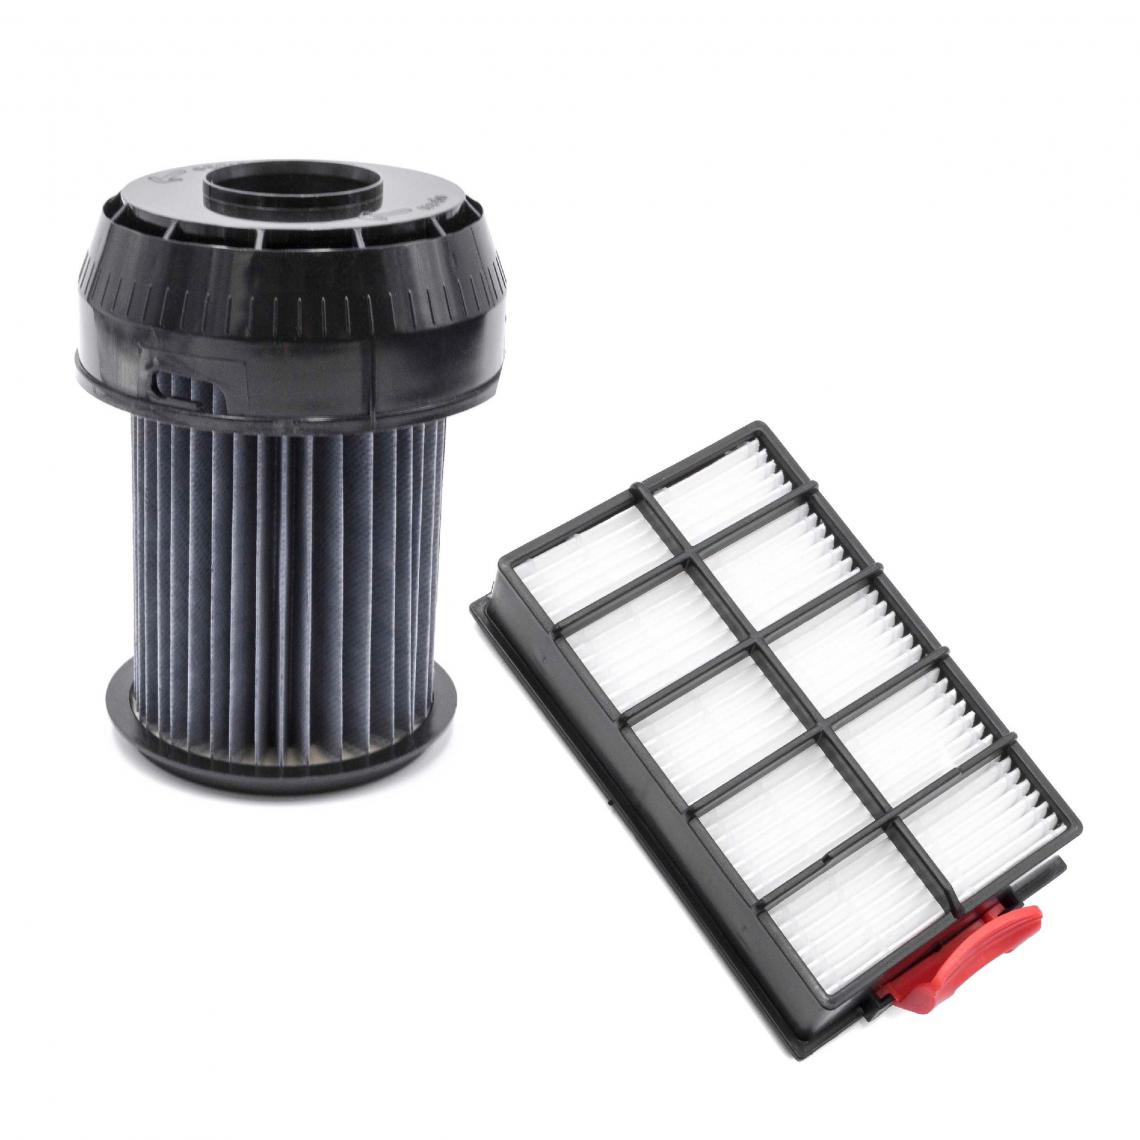 Vhbw - vhbw Lot de filtres compatible avec Bosch BGS 61430, 6143002, 6143004, 6143801, 61466 aspirateur - 2x Filtres de rechange - Accessoire entretien des sols